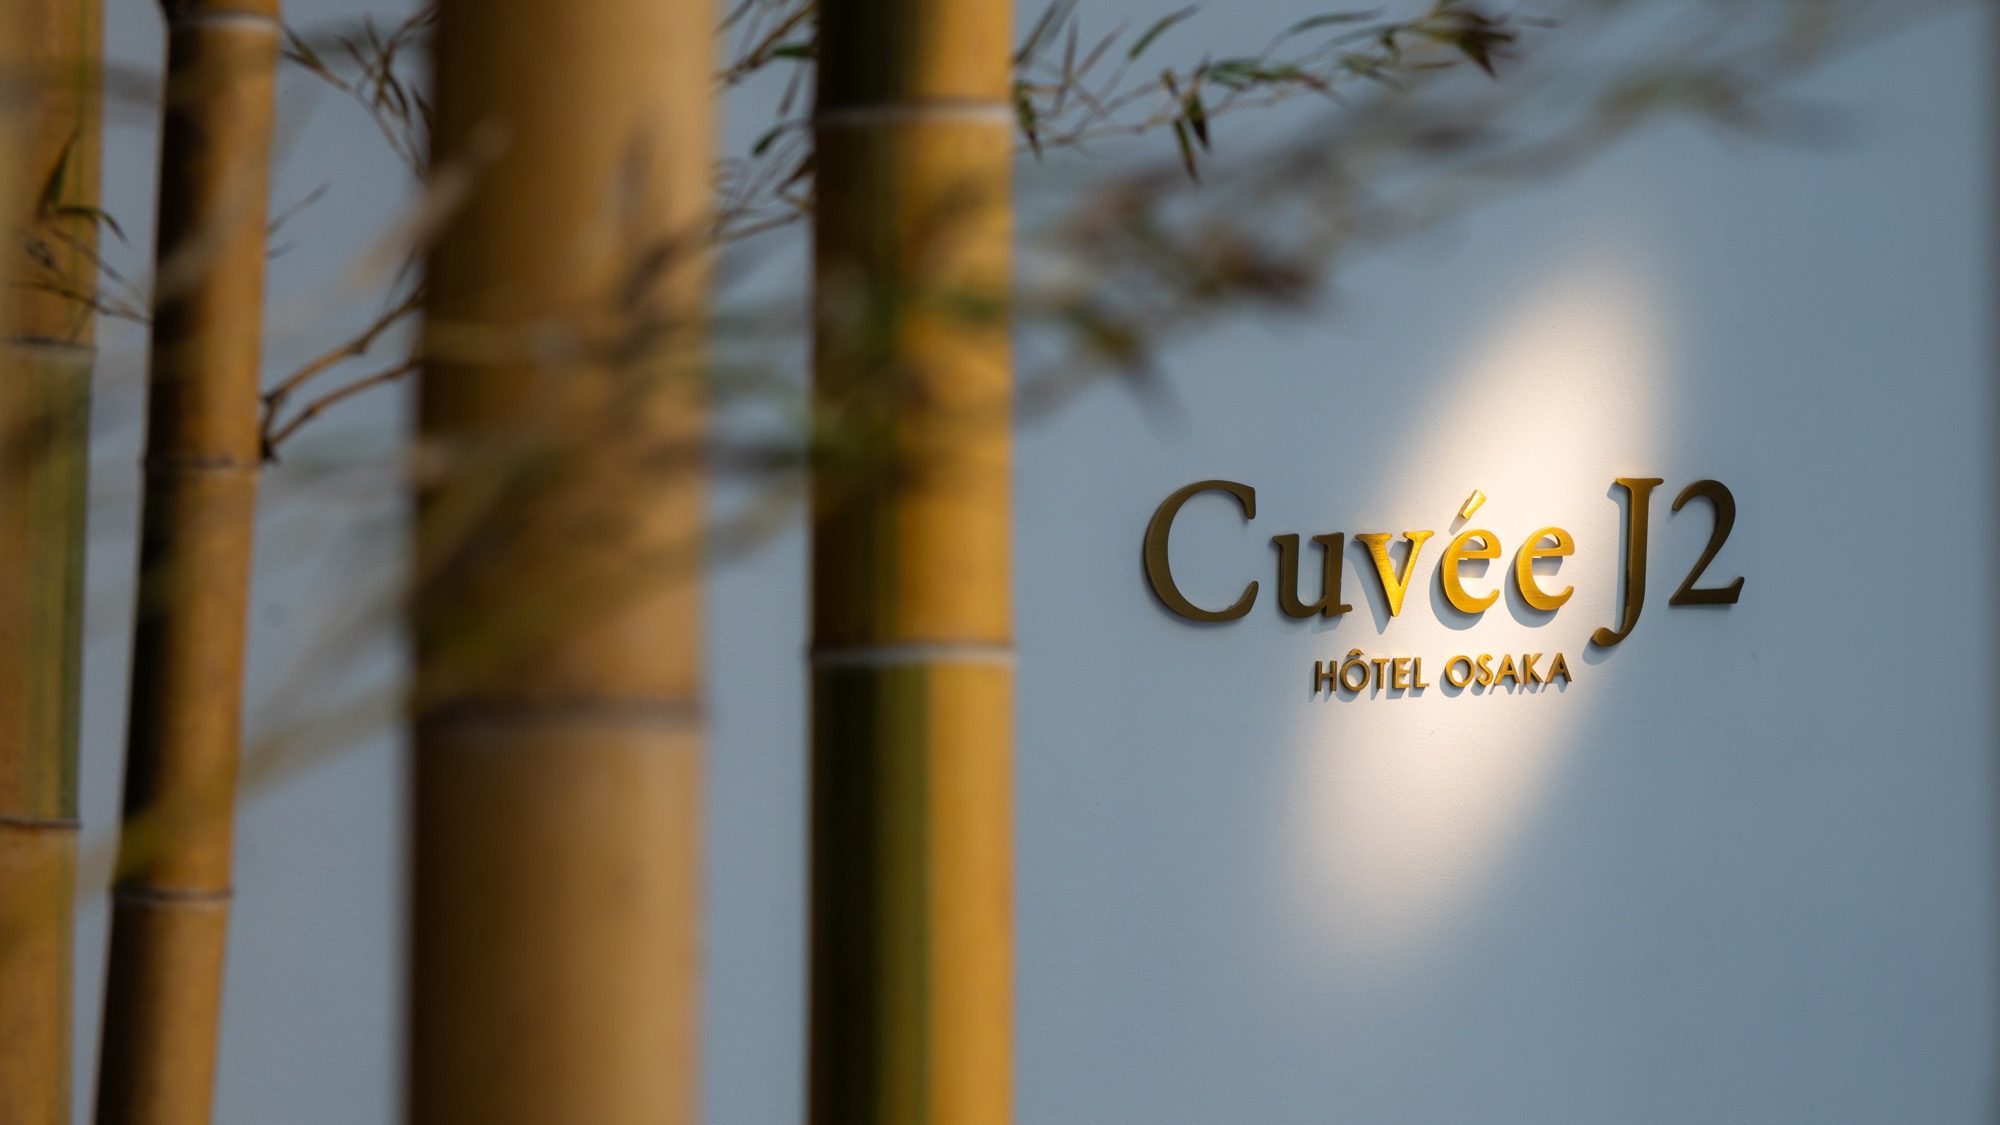 Cuvee J2 Hotel Osaka by Onko Chishin